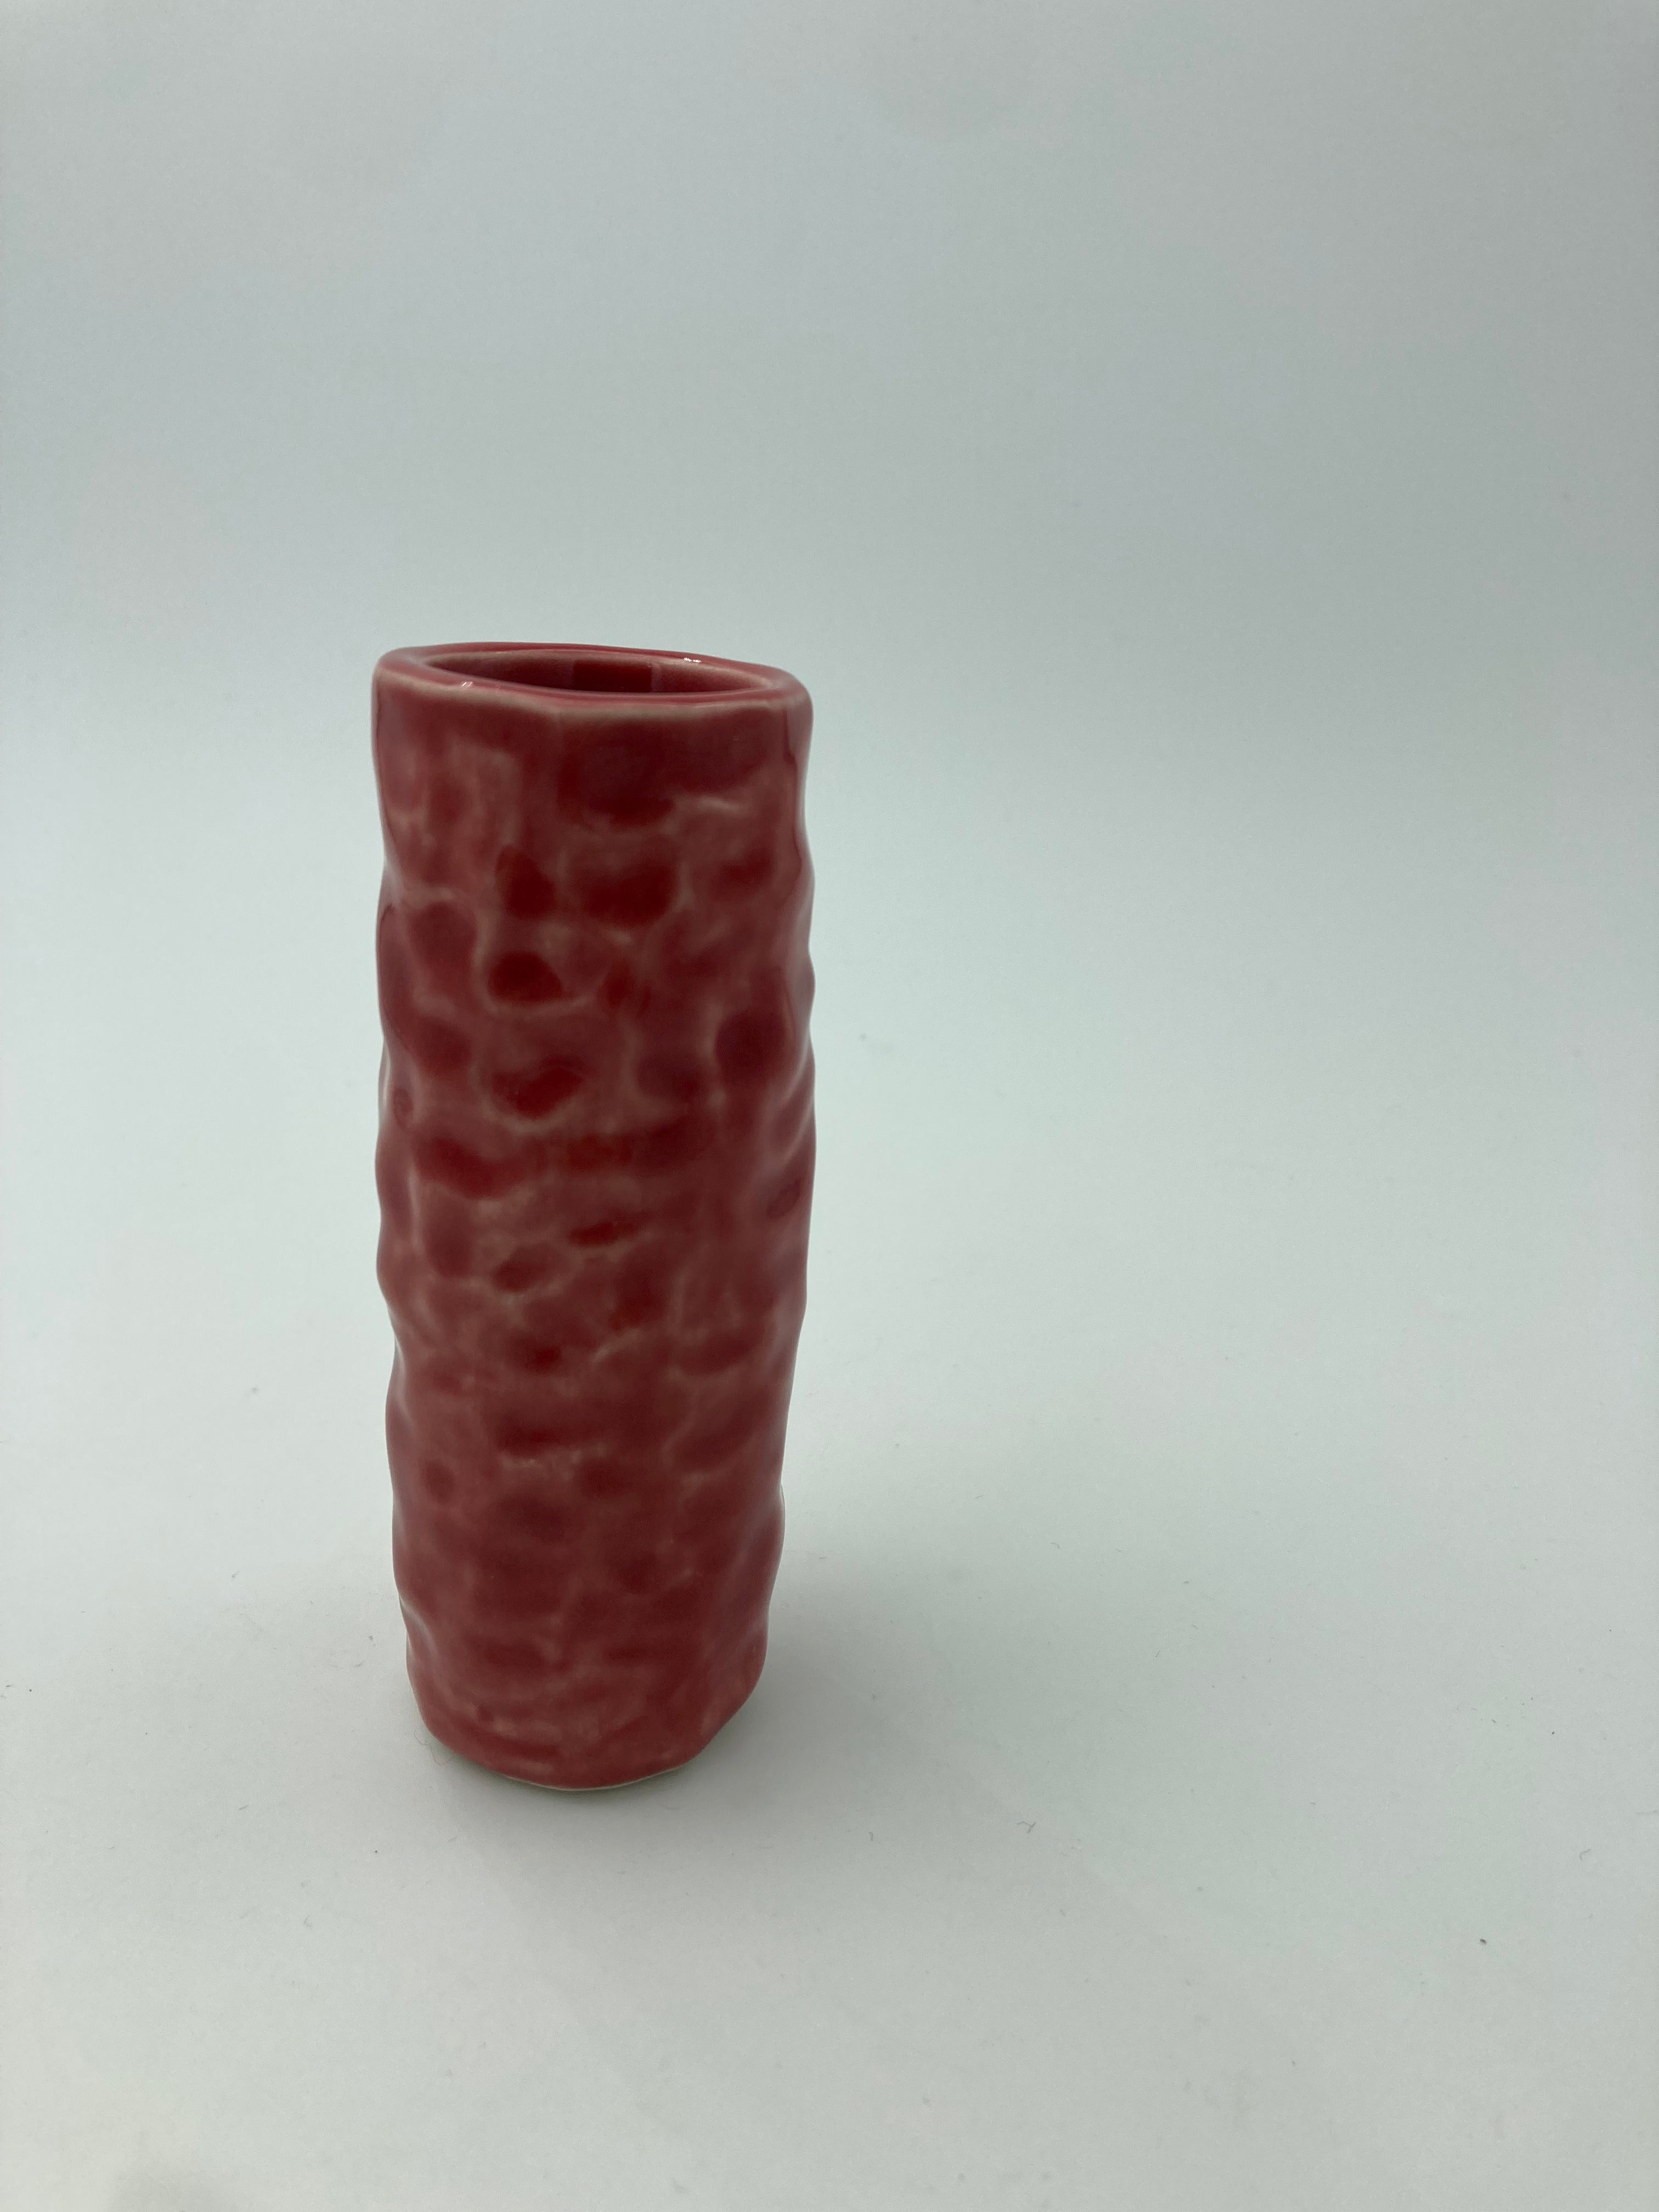 Small decorative object/vase